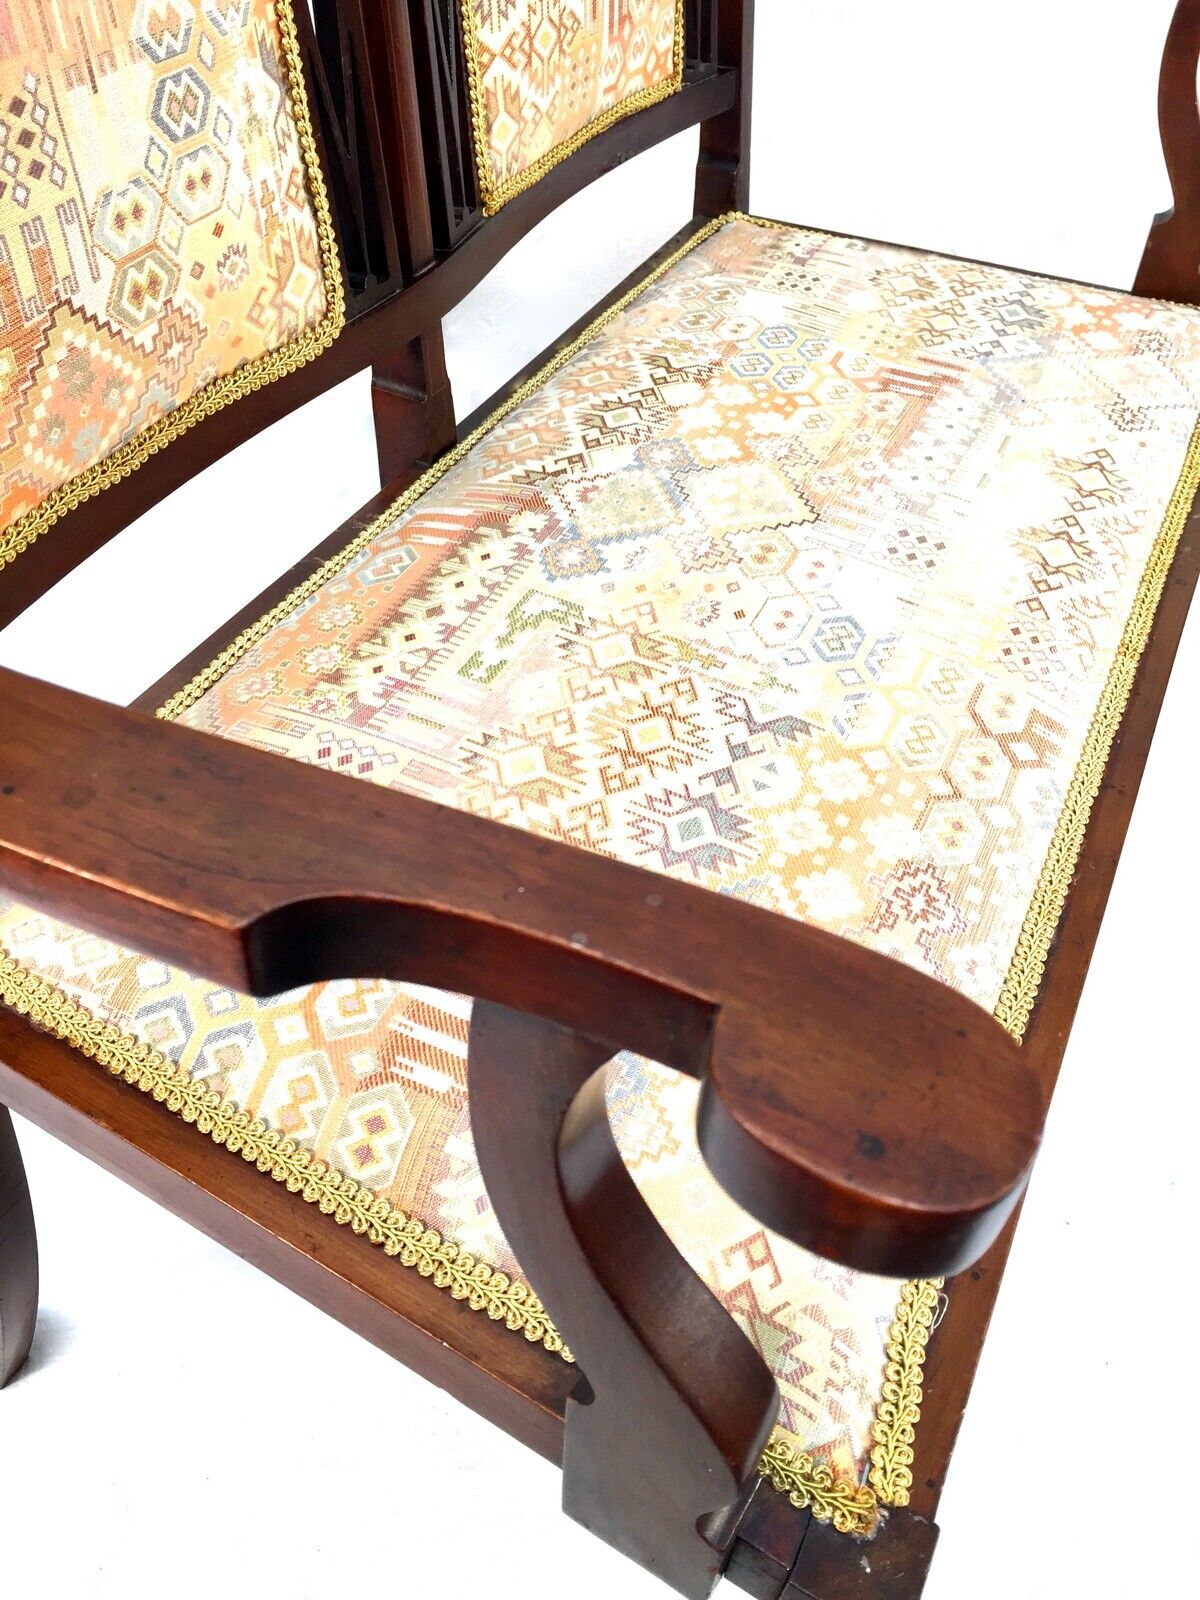 Edwardian Mahogany Wooden Bench / Cushioned Seat / Sofa / Antique Furniture